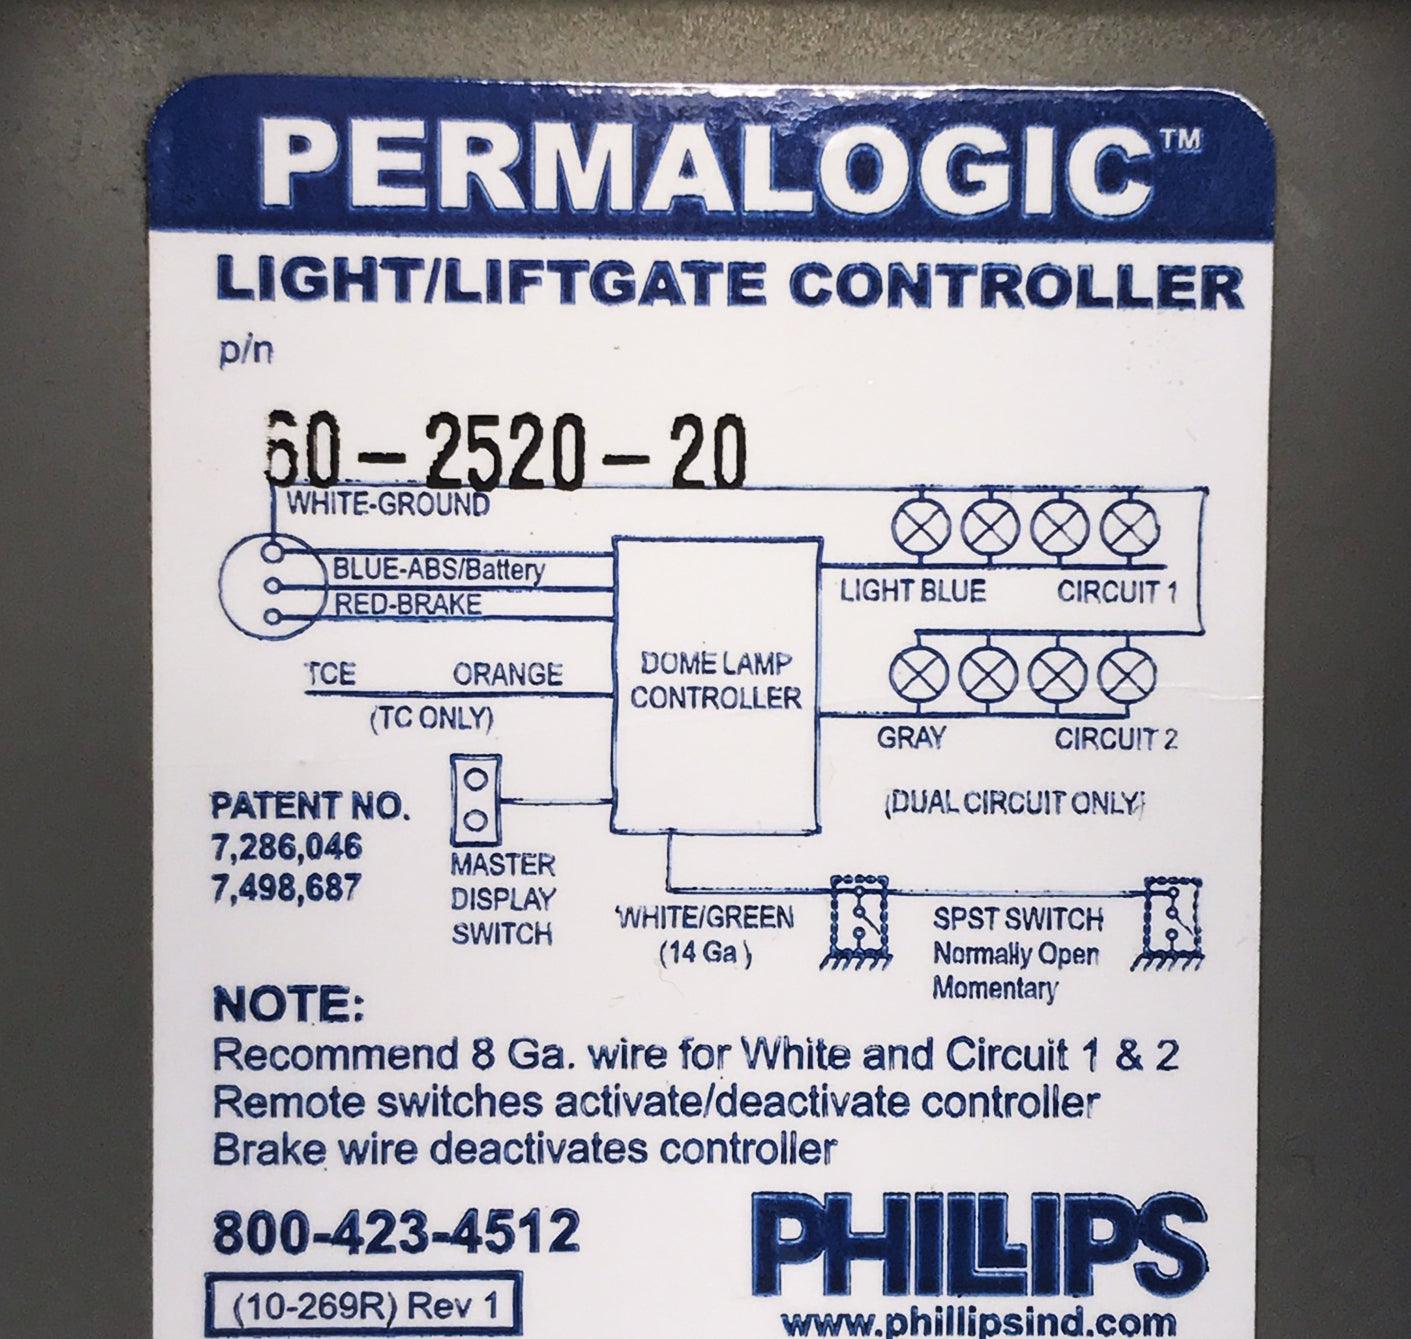 60-2520-20 Phillips® Permalogic Single Circuit Nosebox Dome Lamp Controller - ADVANCED TRUCK PARTS